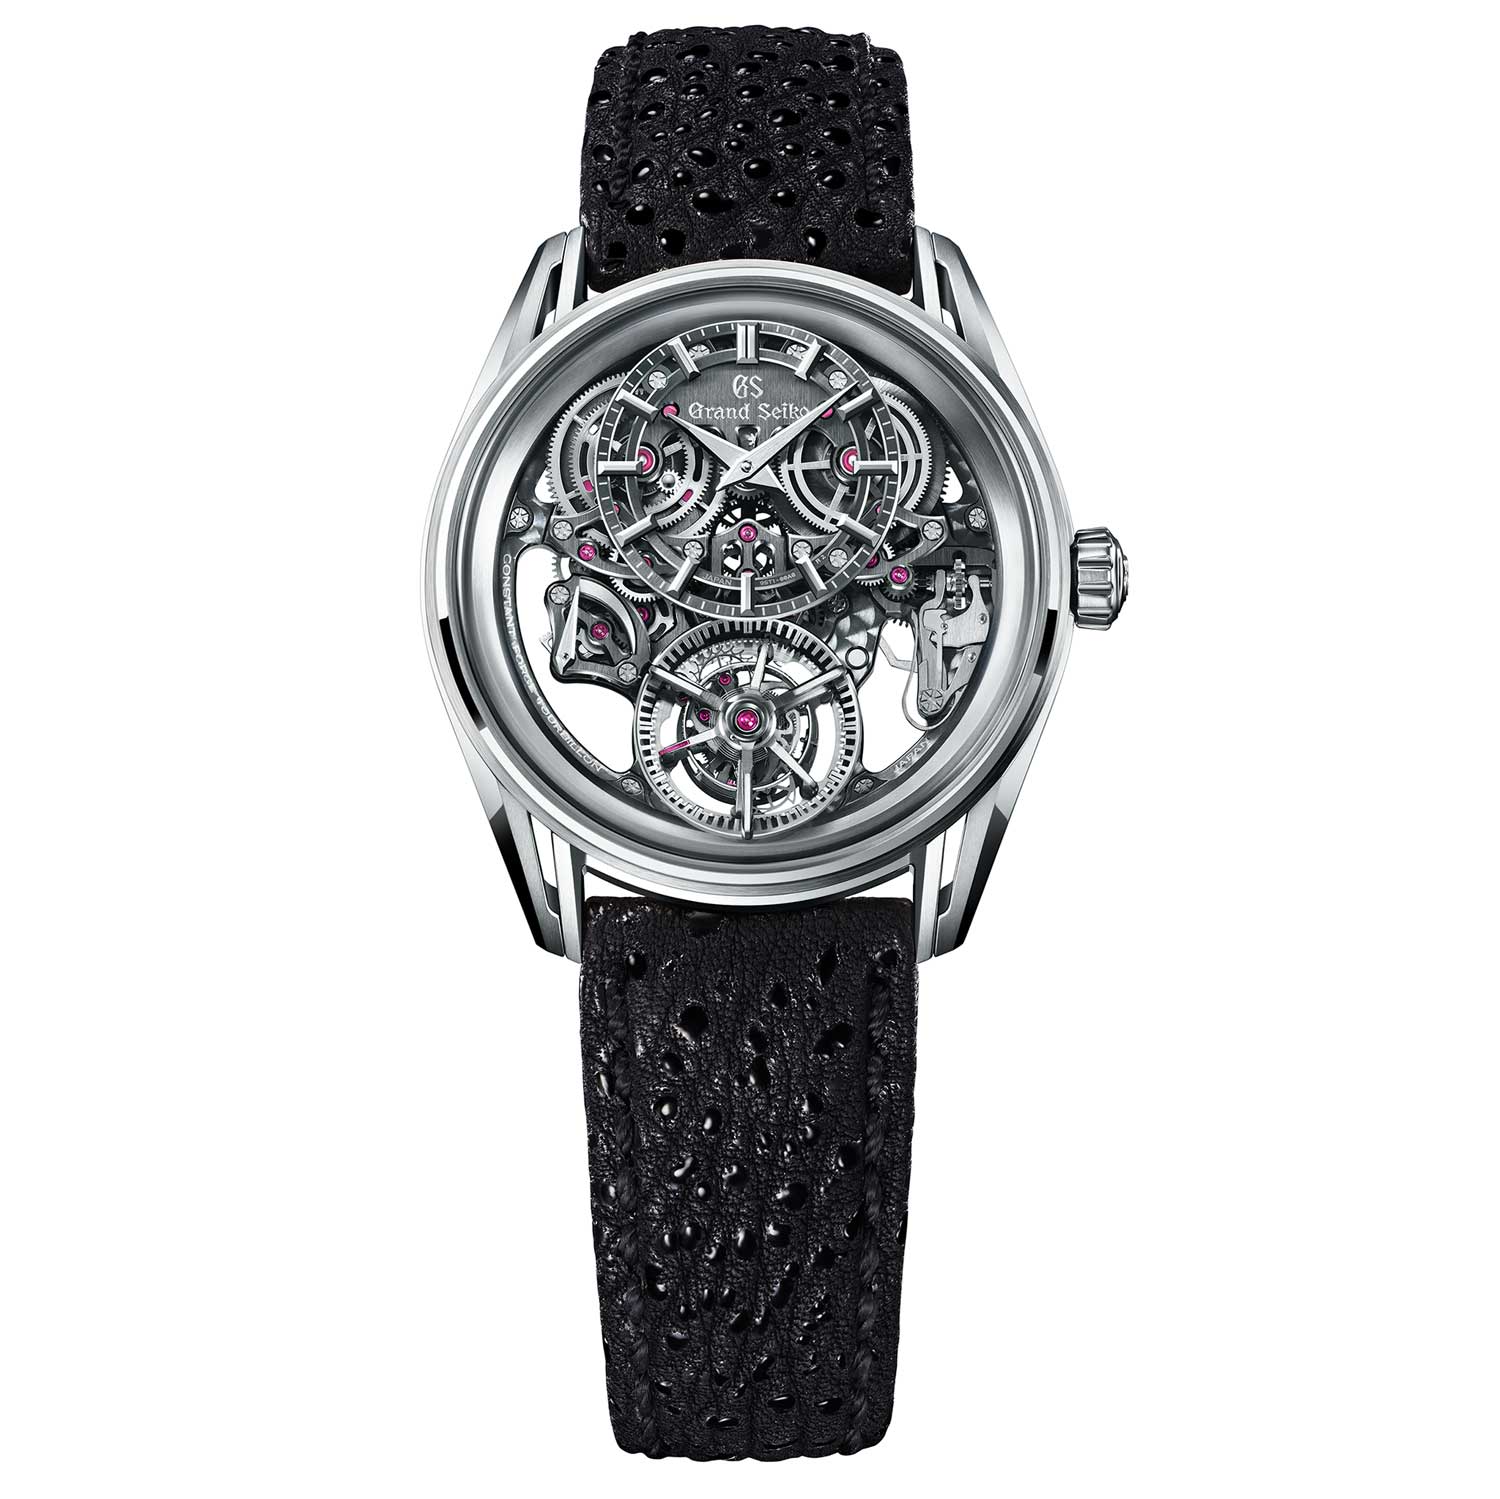 Đồng hồ Grand Seiko Tourbillon T0 (T-Zero) | Kỳ Lân Luxury